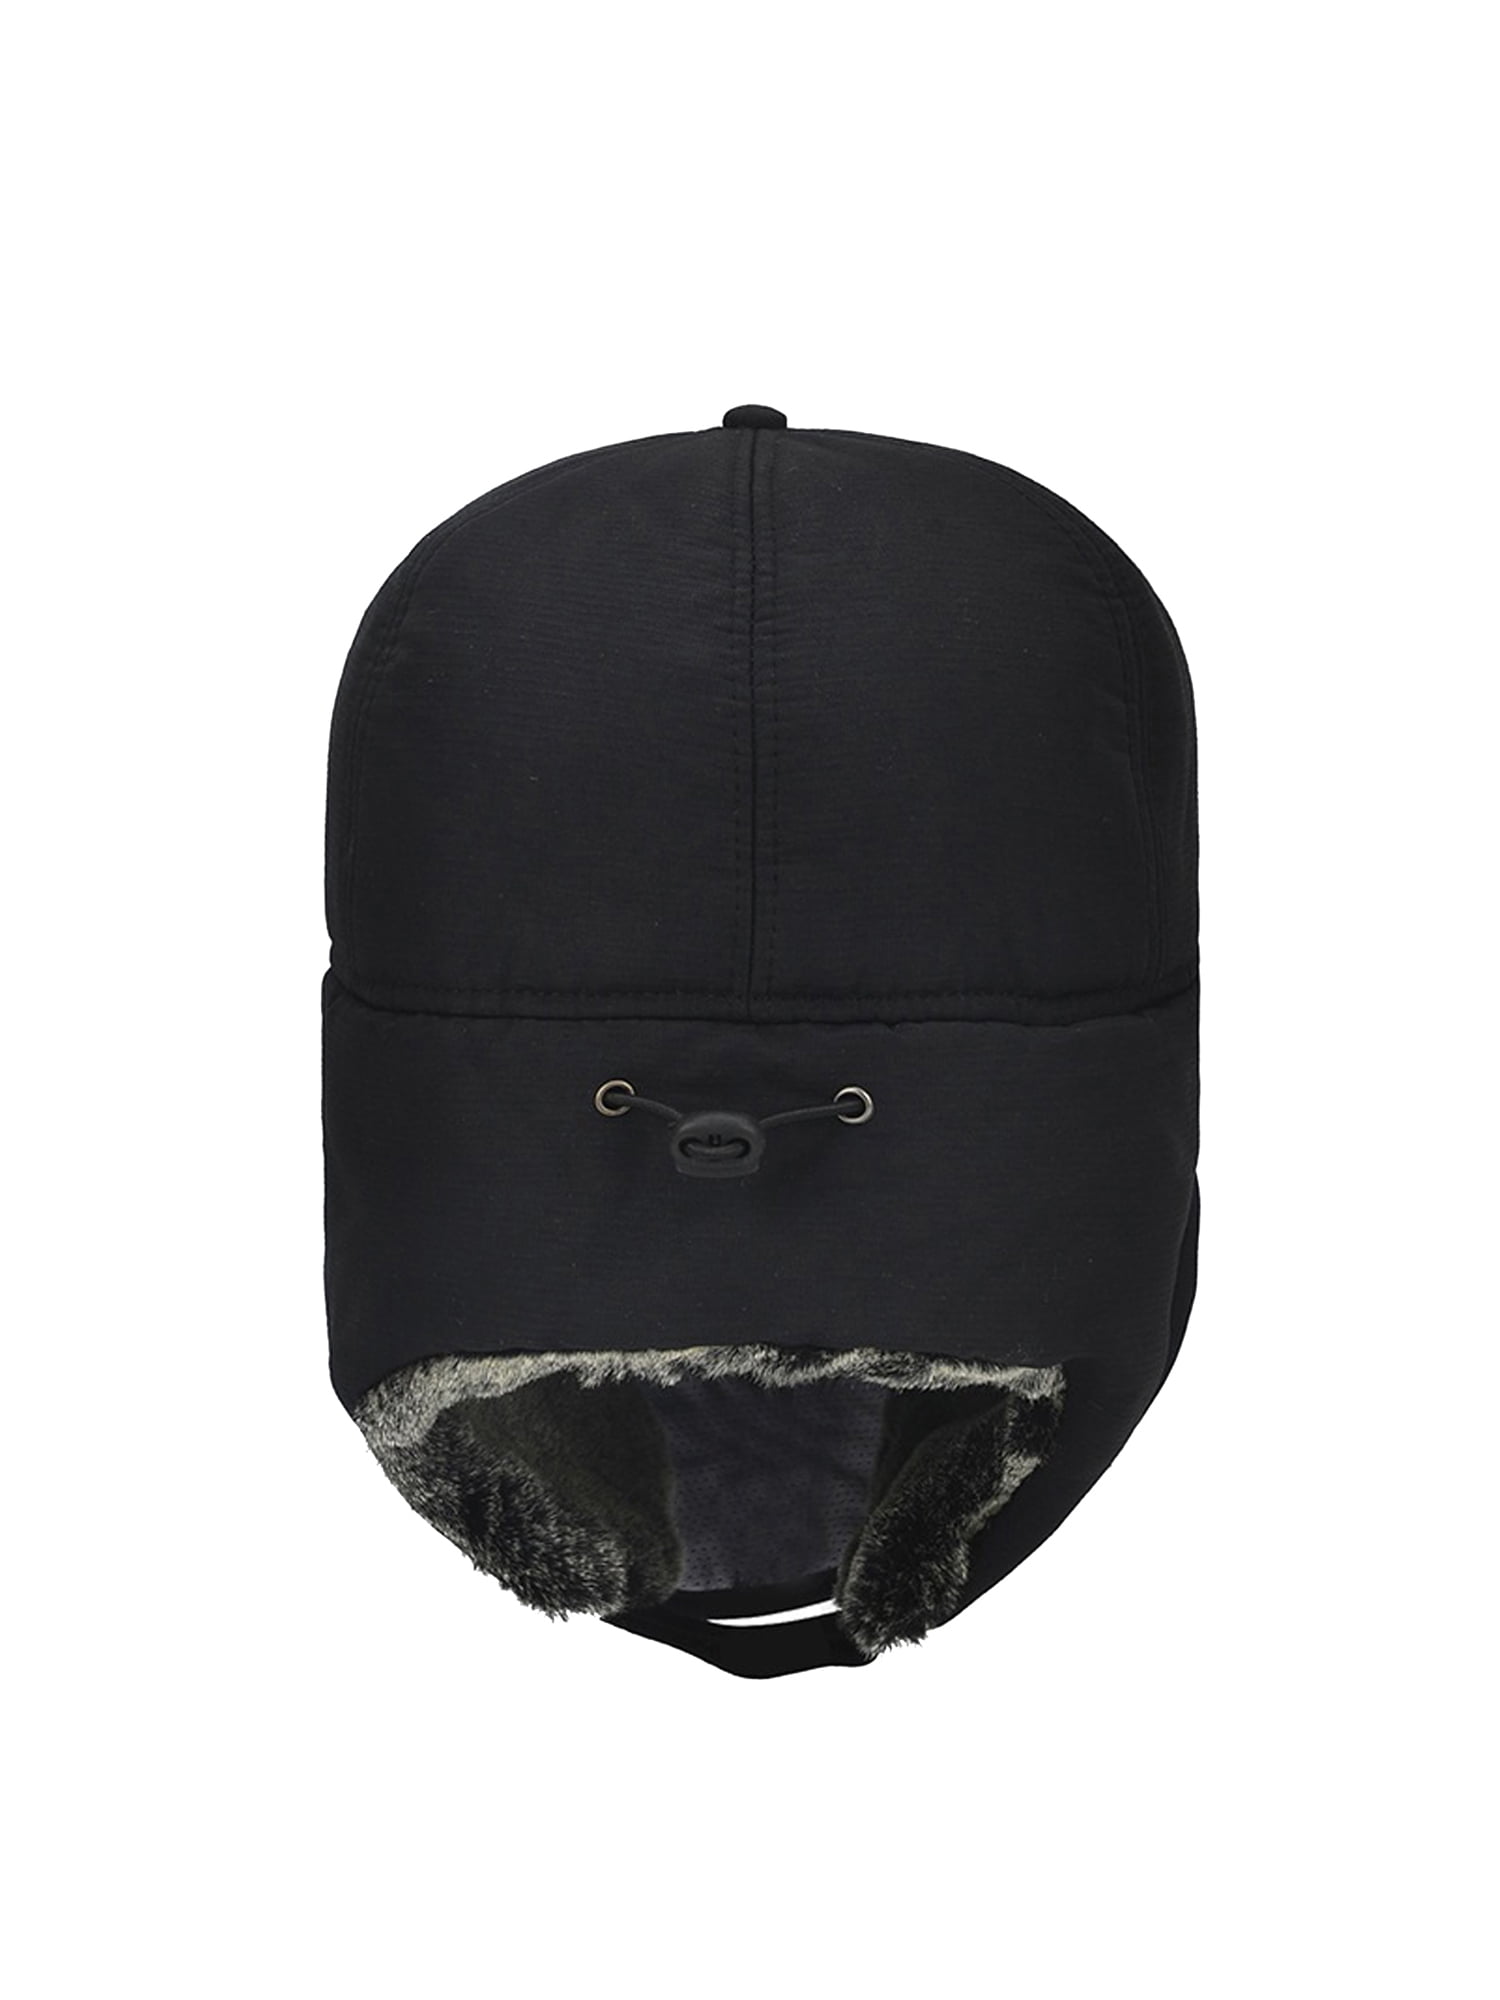 BFDADI Winter Warm Proof Trapper Hat 2022 New Men's Bomber Hats